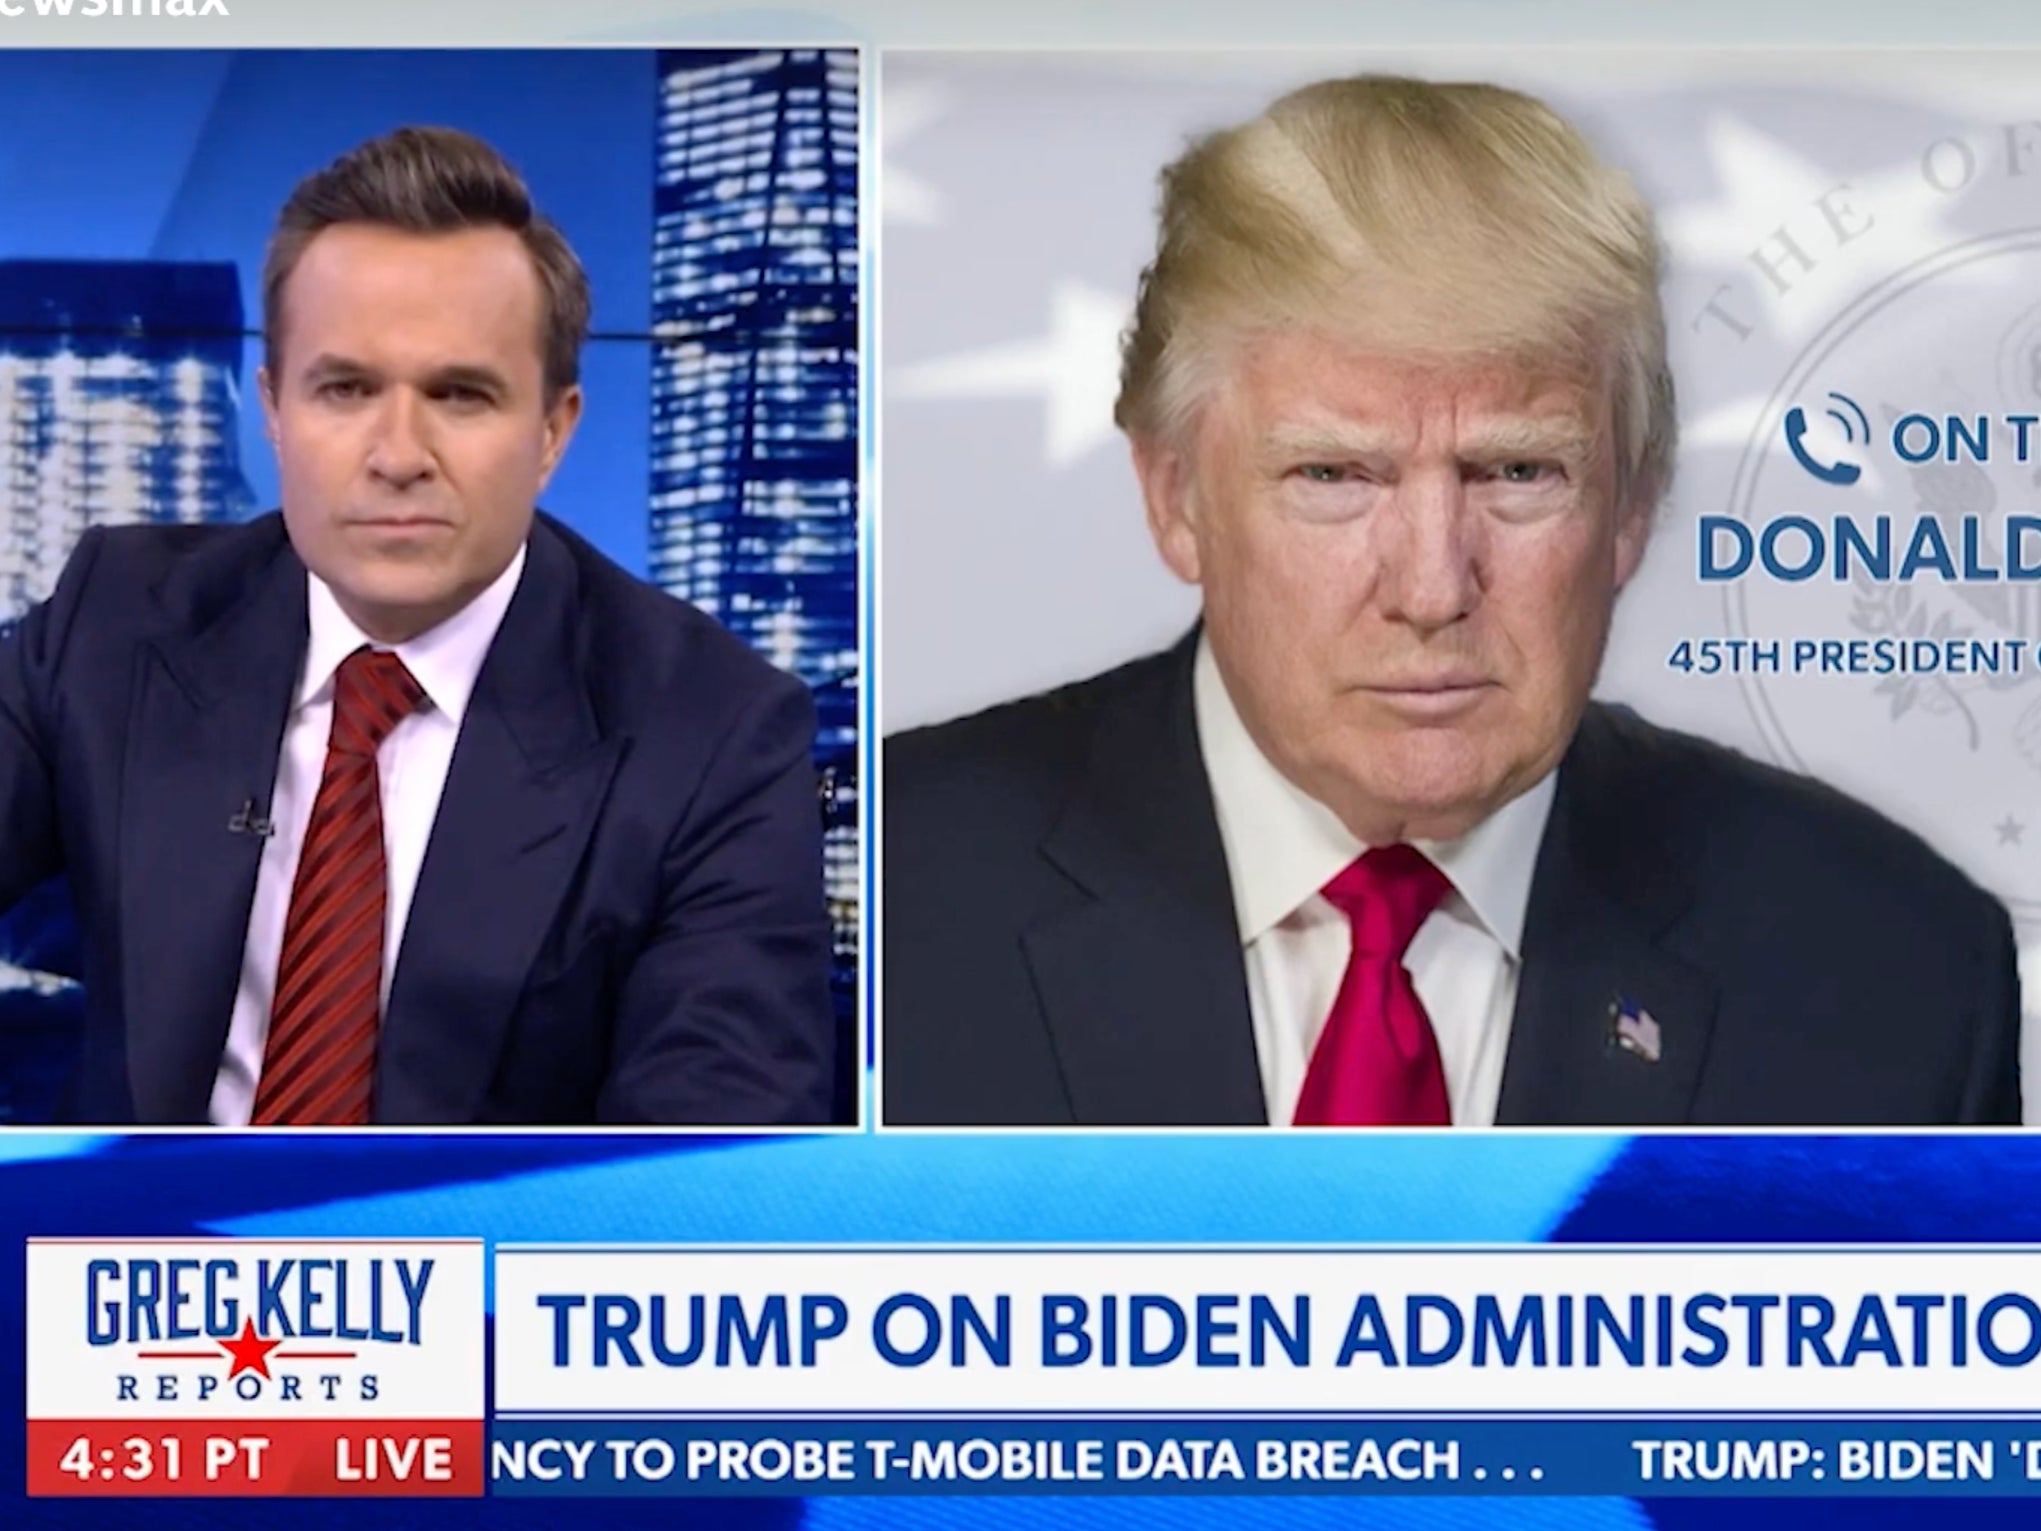 Newsmax anchor Greg Kelly interviewing Donald Trump